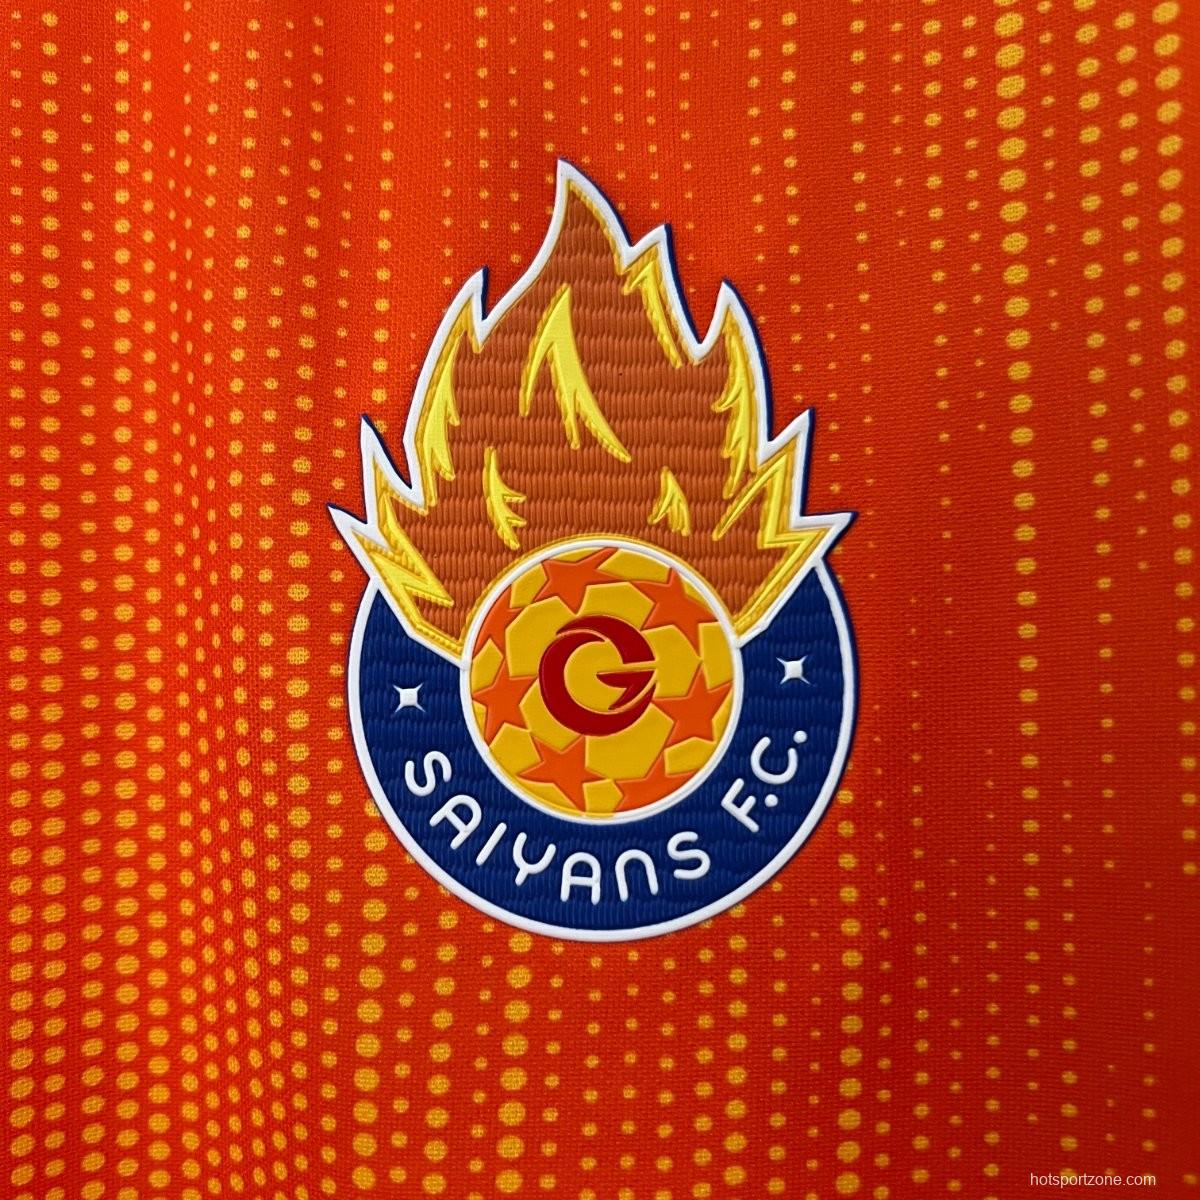 24/25 Kings League Saiyans FC Orange Jersey